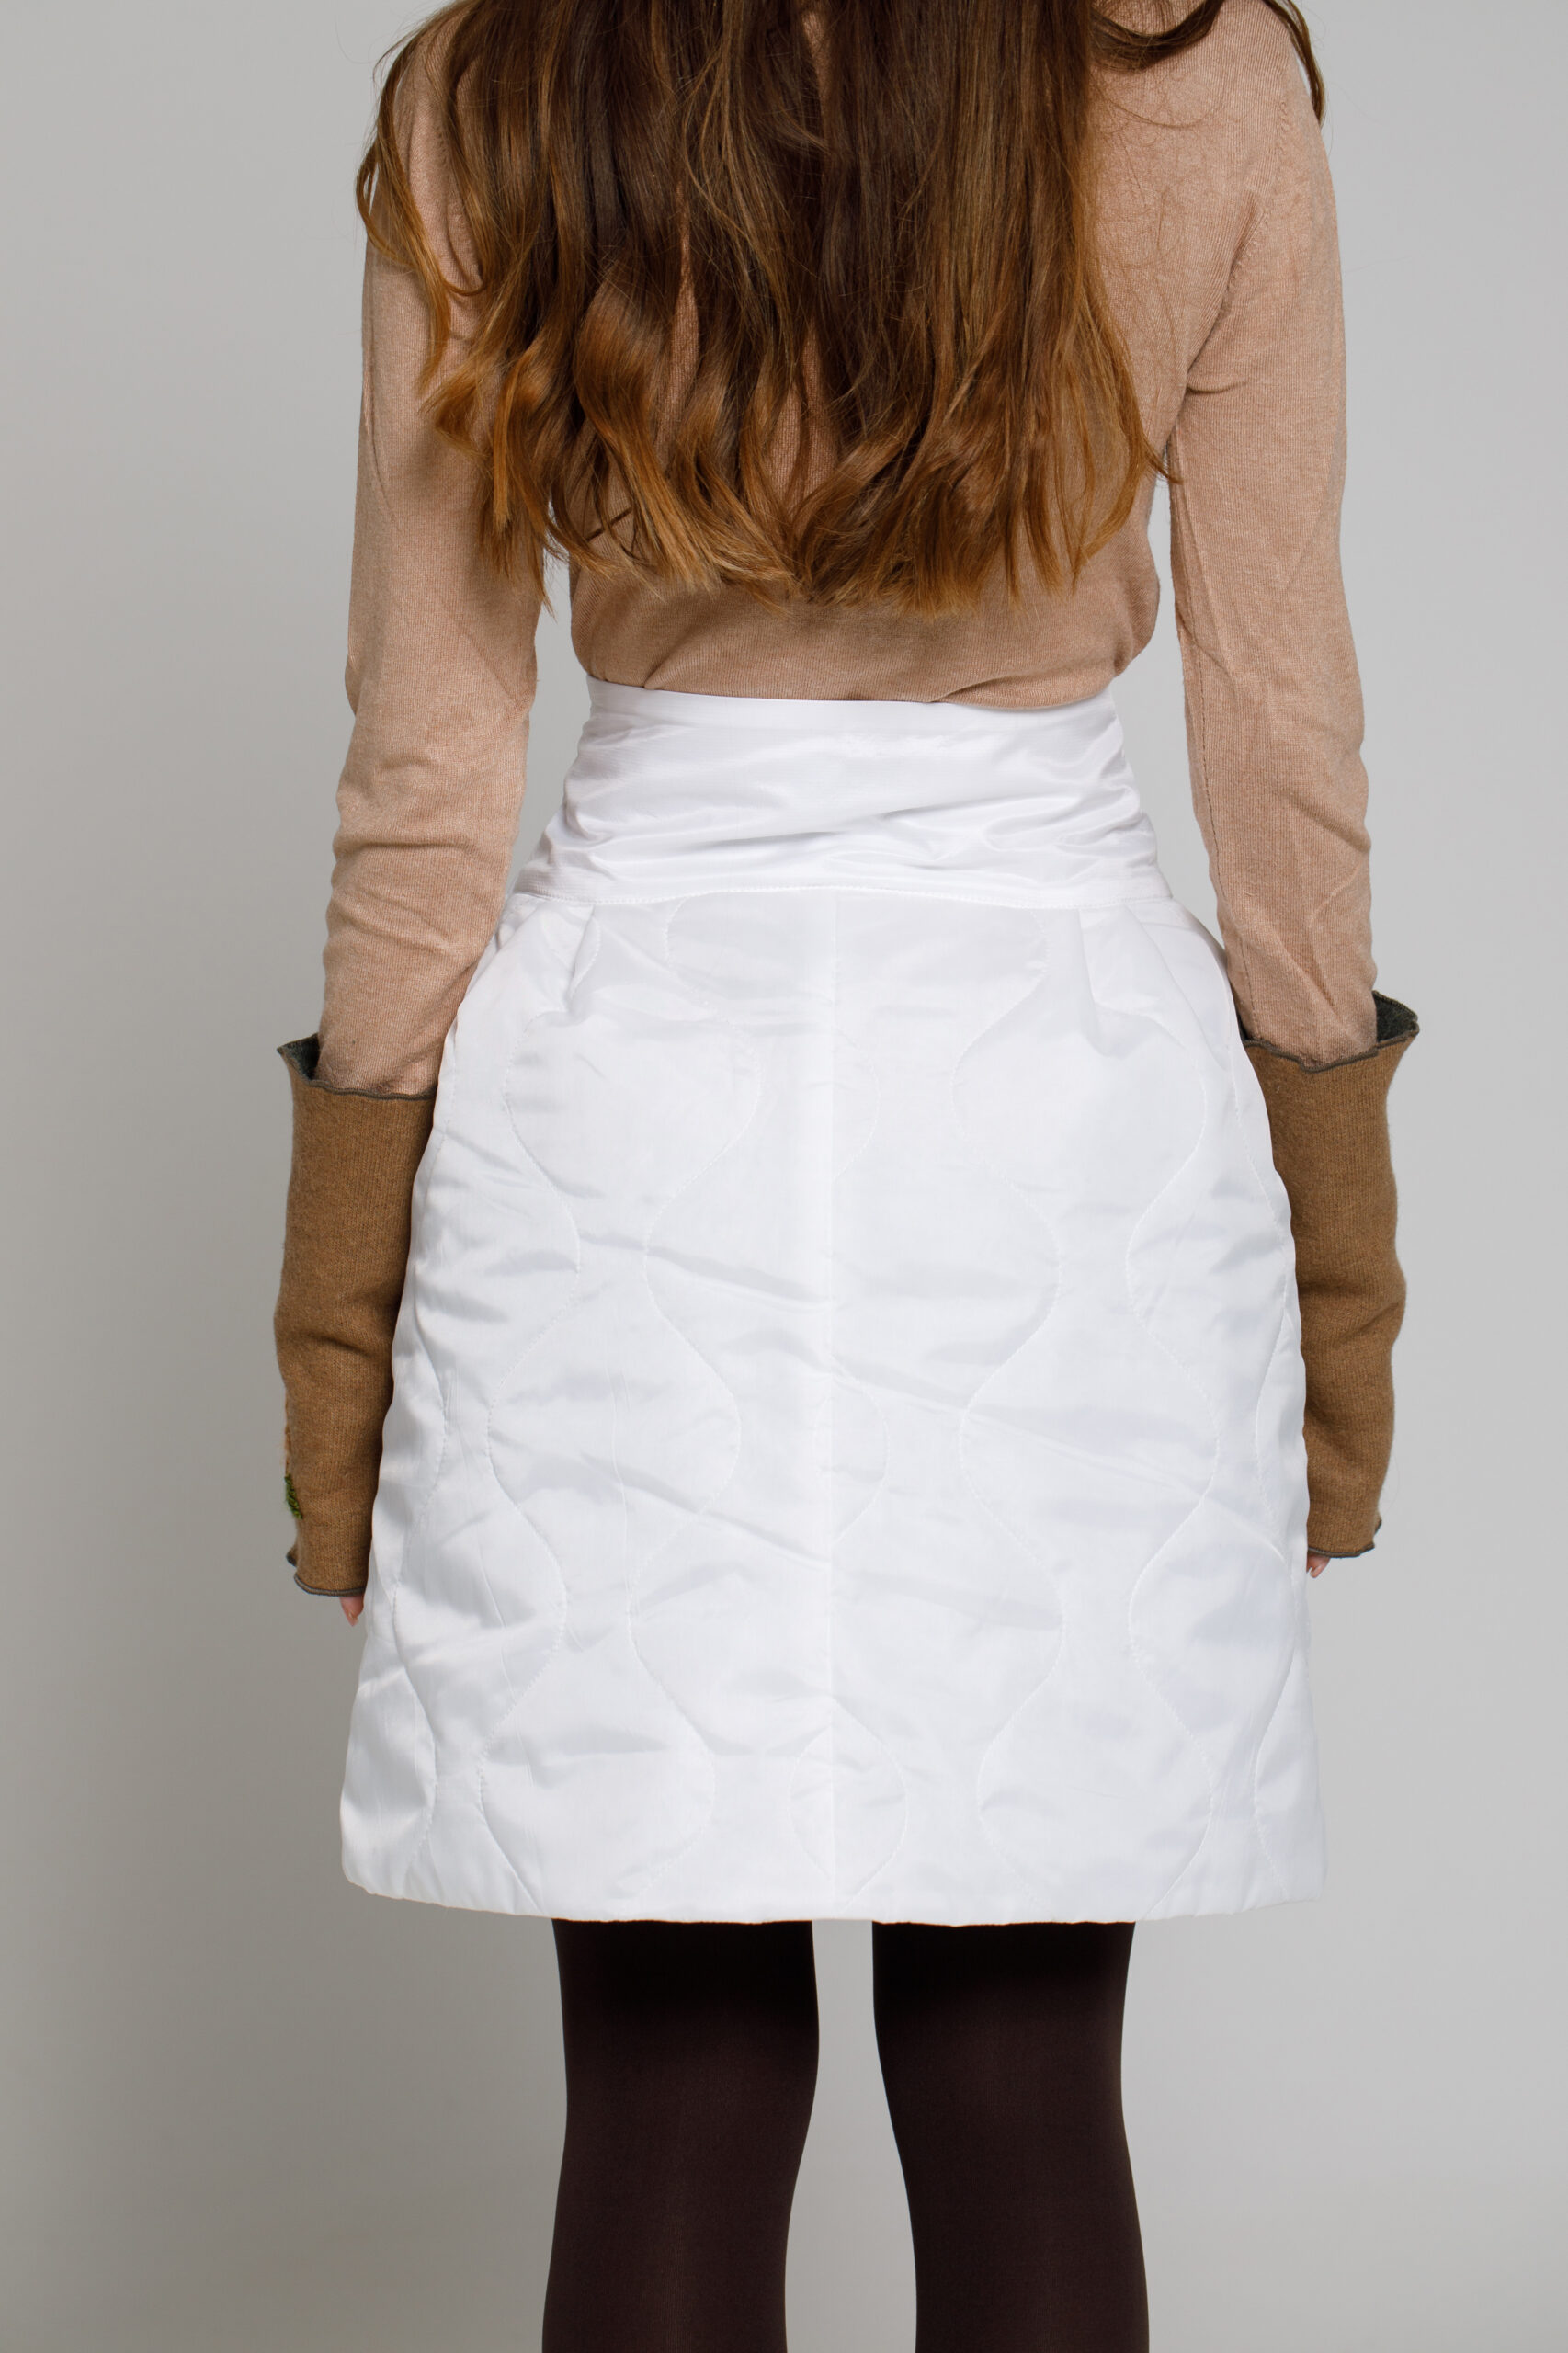 HEBA white quilted skirt. Natural fabrics, original design, handmade embroidery